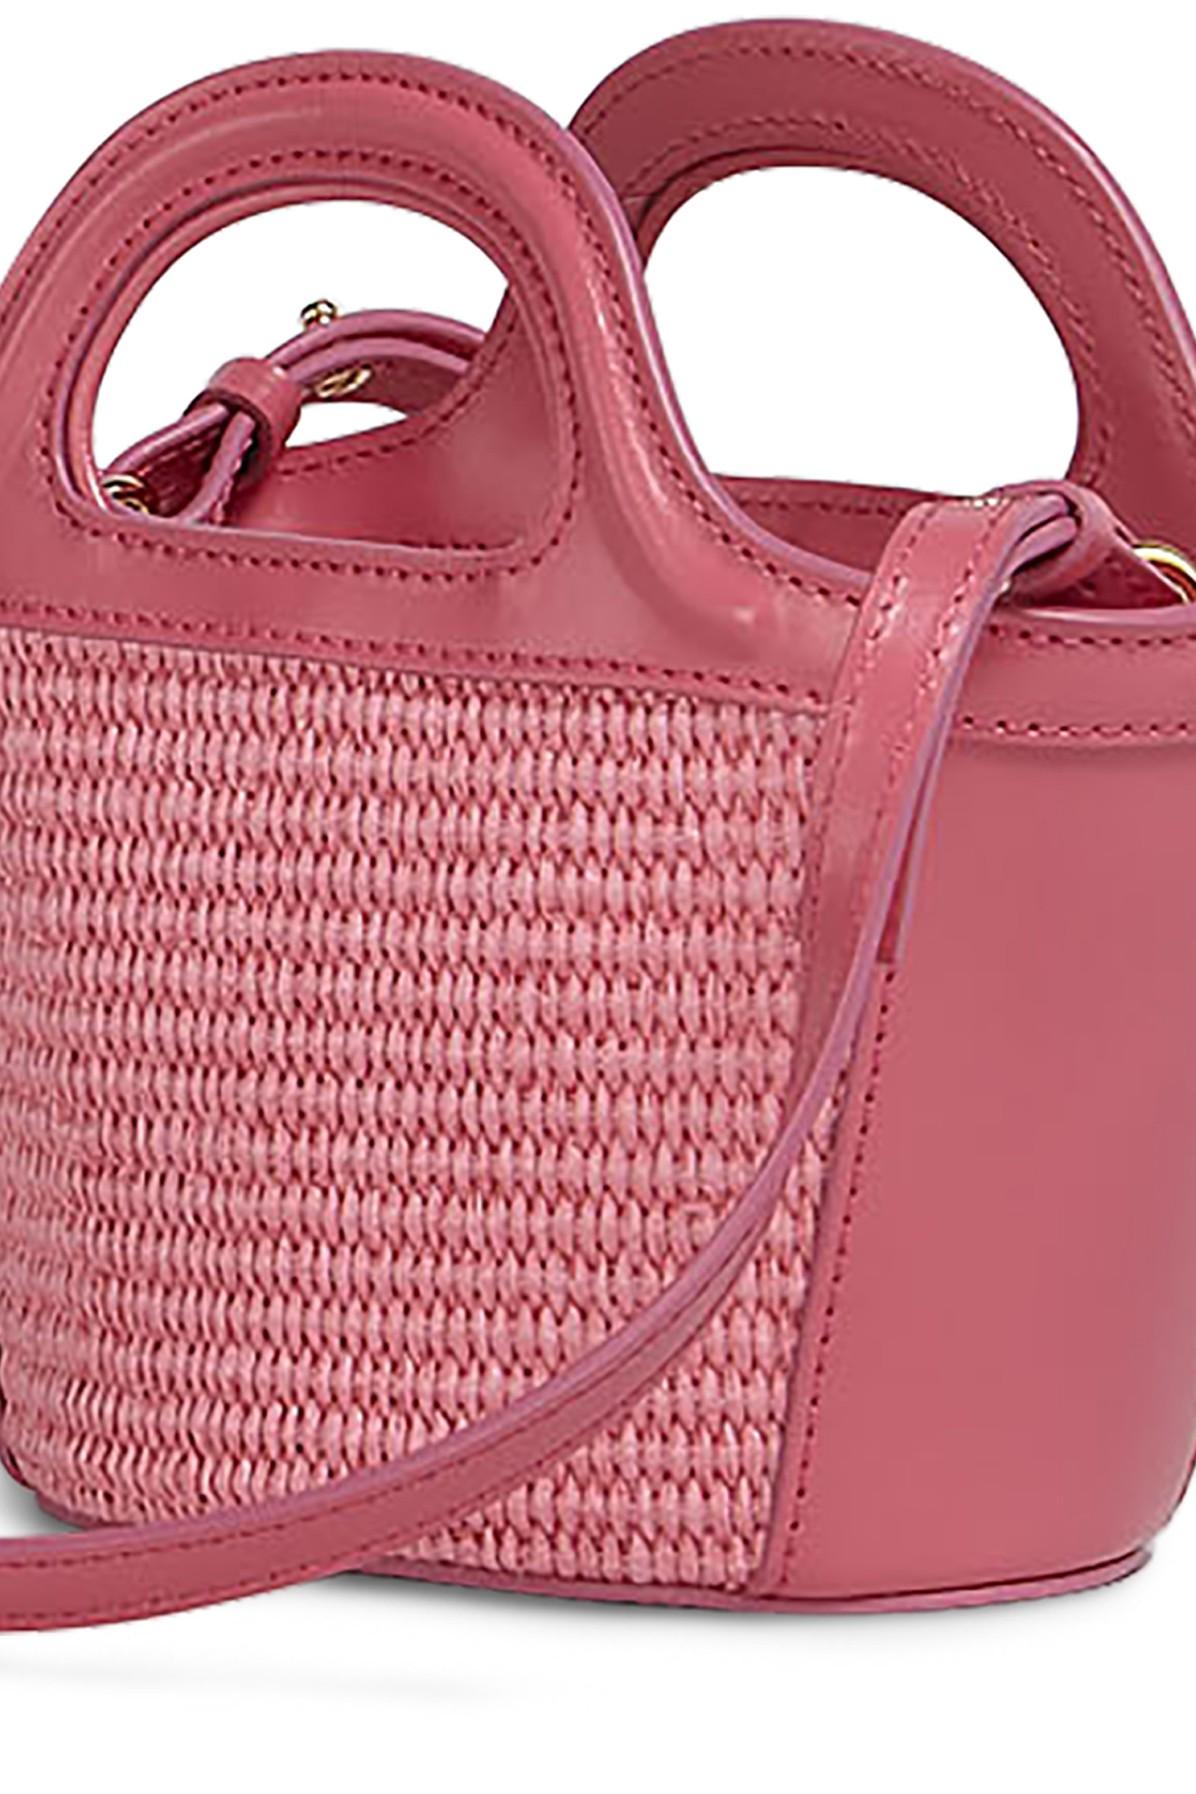 Marni Tropicalia Micro Bag In Leather And Raffia in Pink